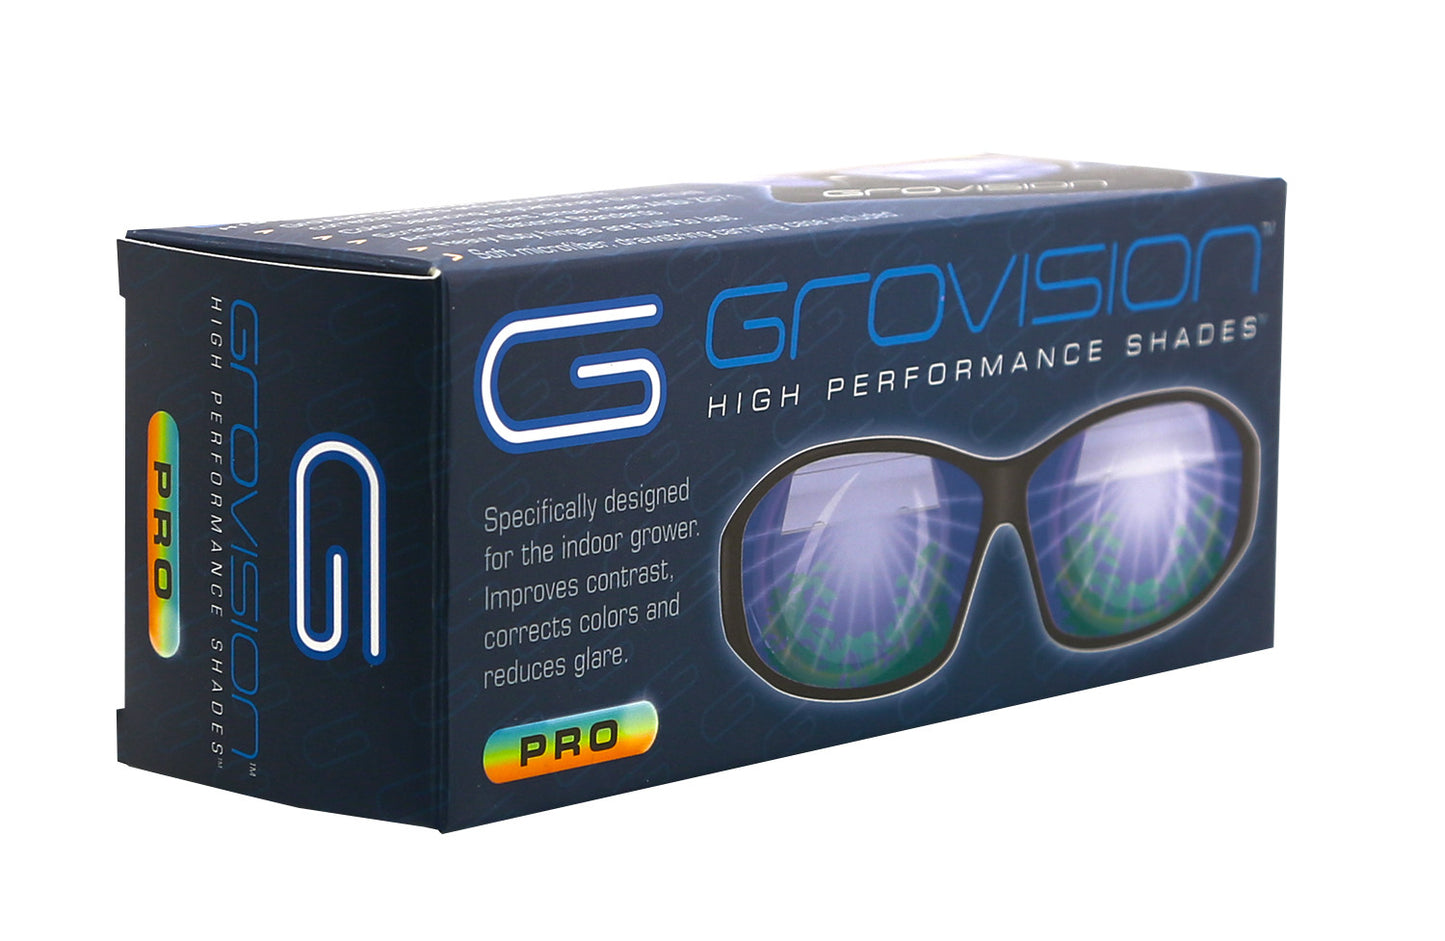 GROVISION high performance shades - Pro